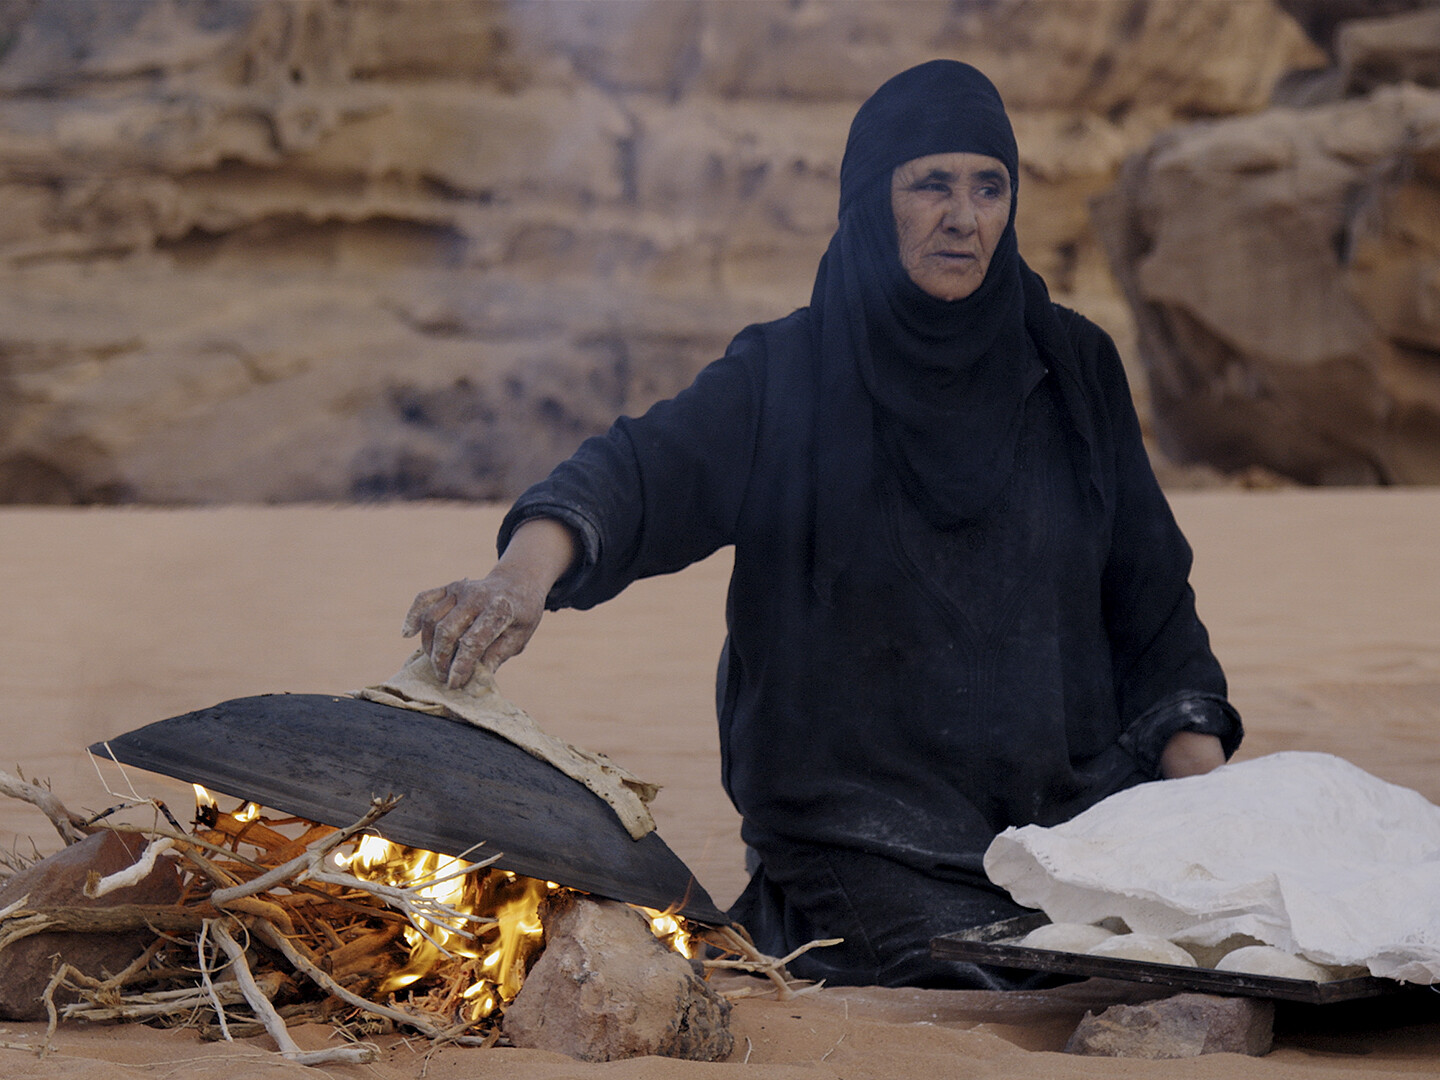 Woman making bread in the desert